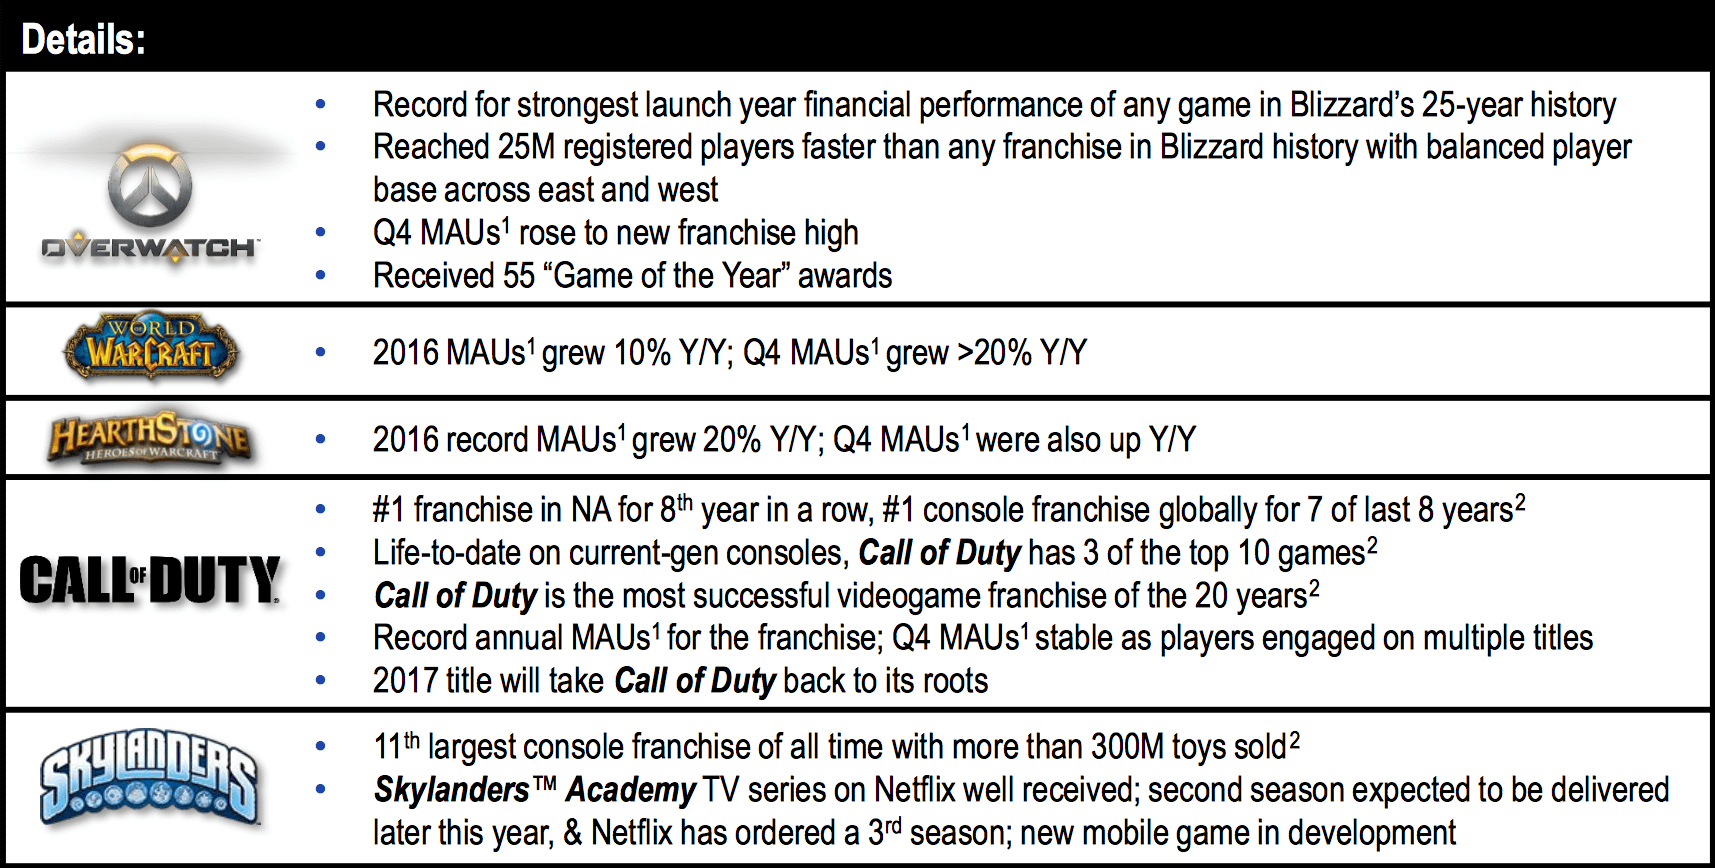 Activision Blizzard Plans for 2017